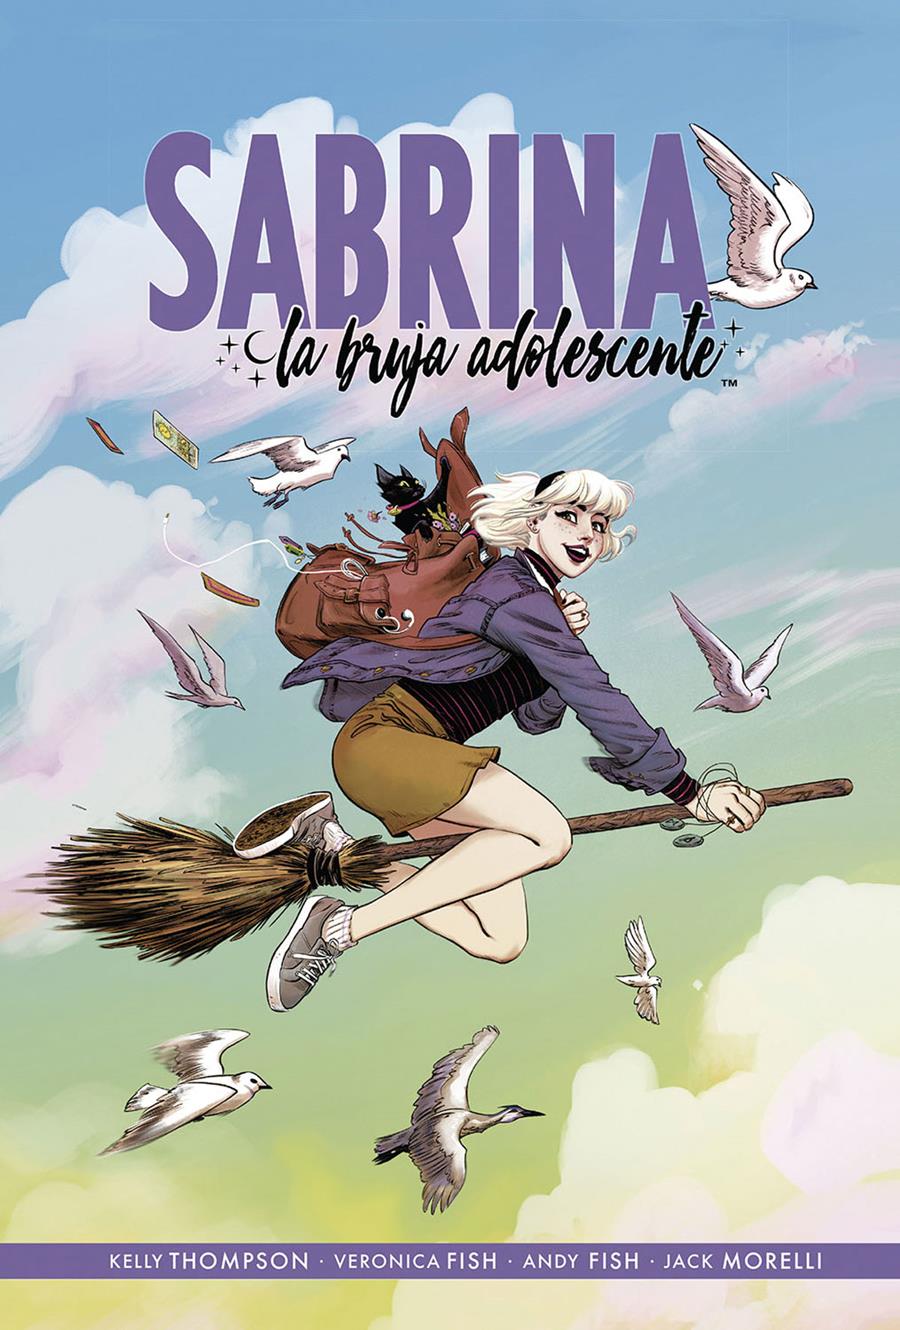 Sabrina la bruja adolescente 01 | N1120-NOR38 | Kelly Thompson | Terra de Còmic - Tu tienda de cómics online especializada en cómics, manga y merchandising